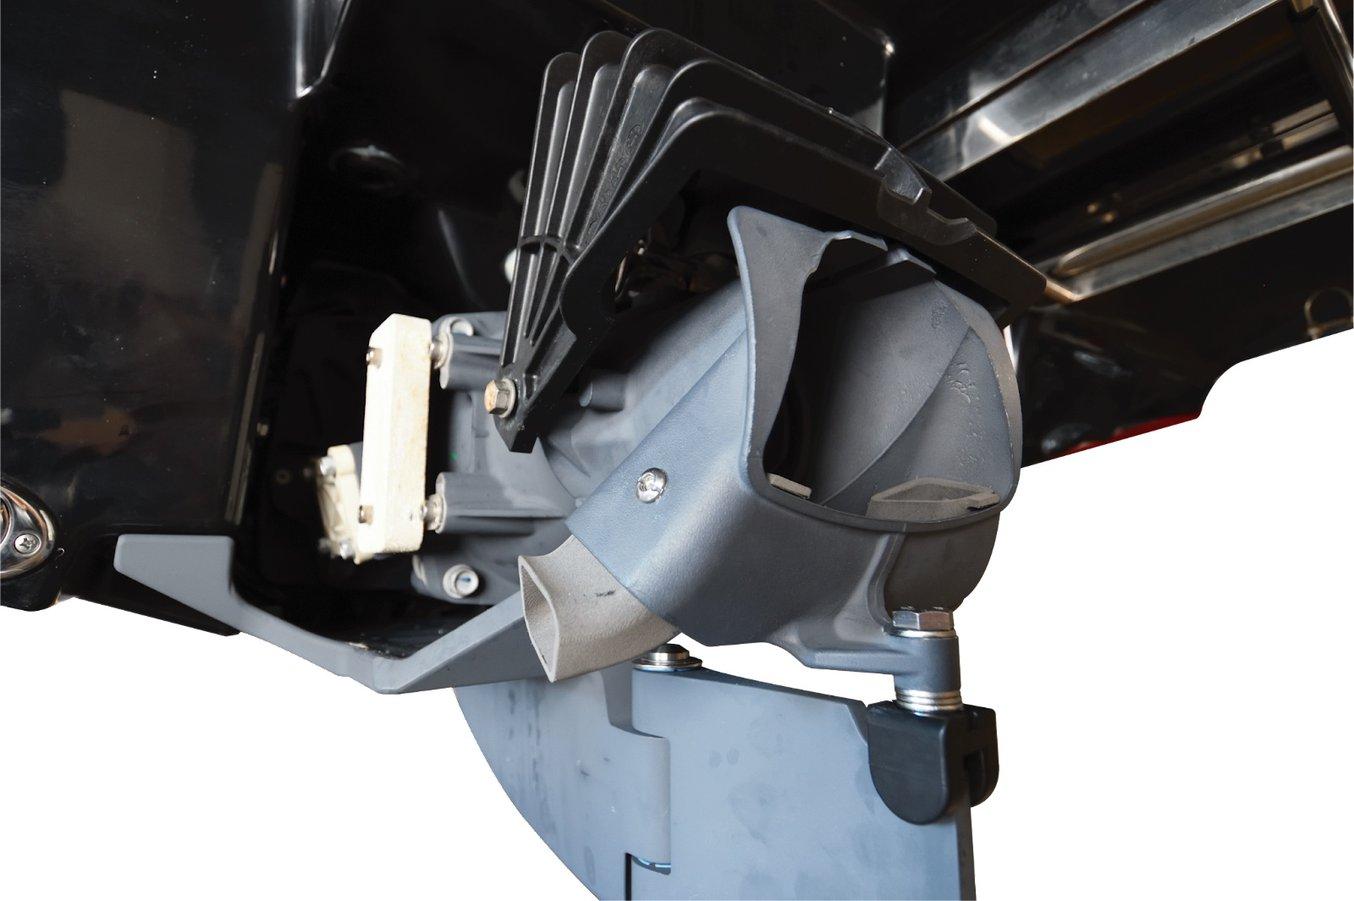 Fuse 1으로 프린팅한 JetBoat Pilot의 엔진 스러스터(엔진 개구부의 밝은 회색 부품).